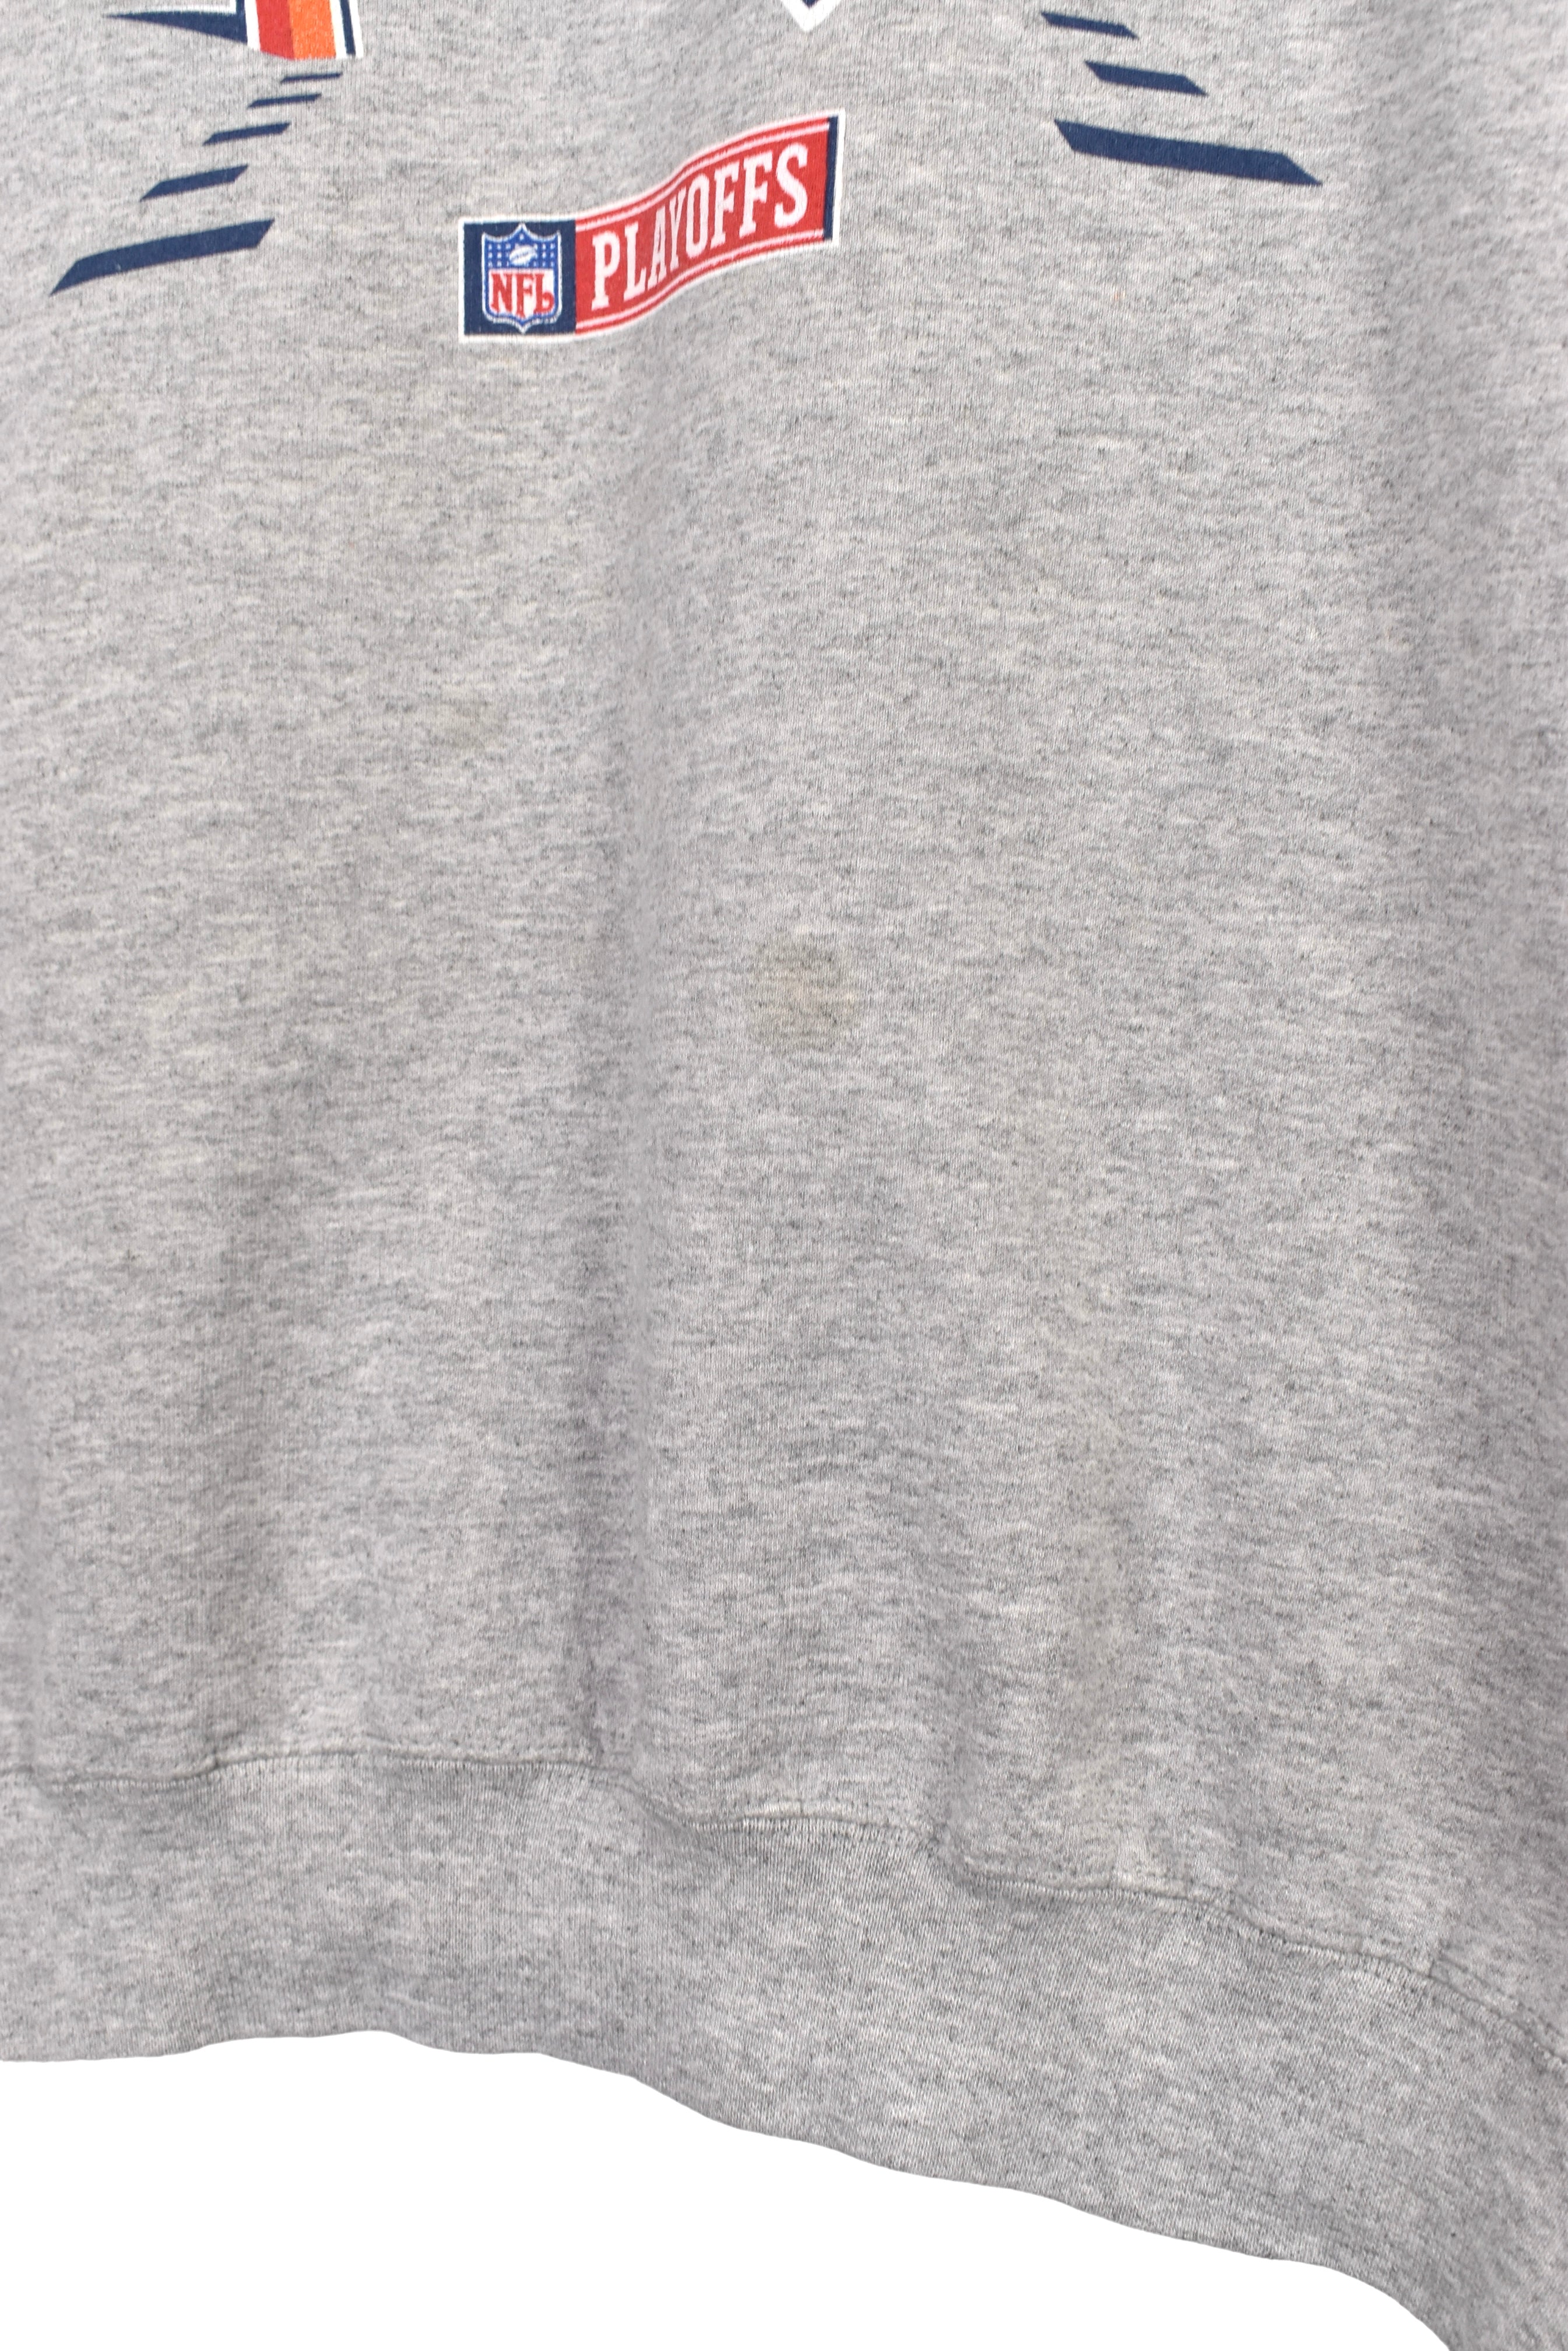 Vintage New England Patriots sweatshirt (2XL), grey NFL graphic crewneck